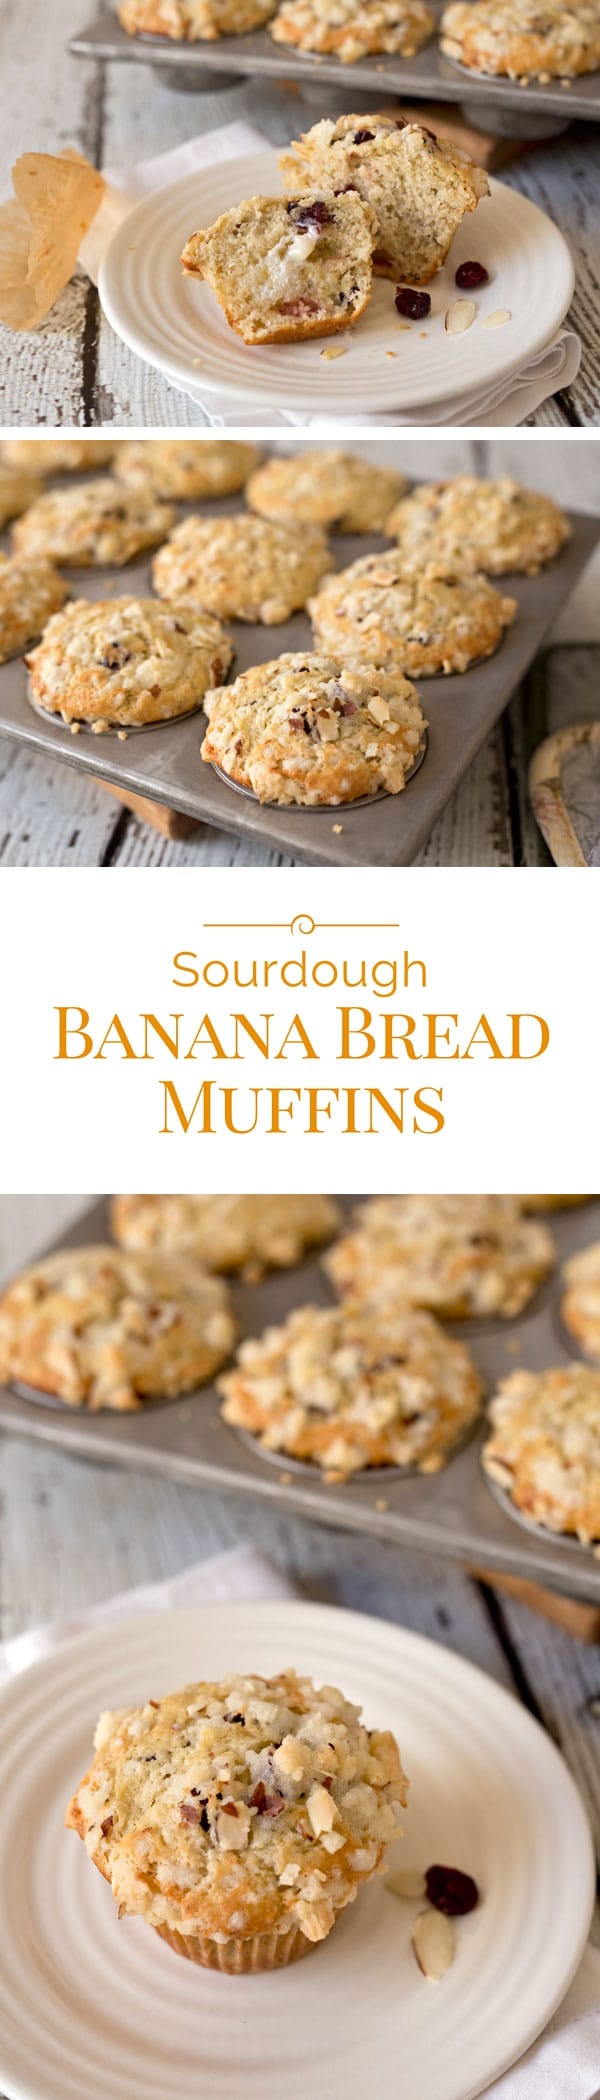 Sourdough-Banana-Bread-Muffins-Collage-Barbara-Bakes